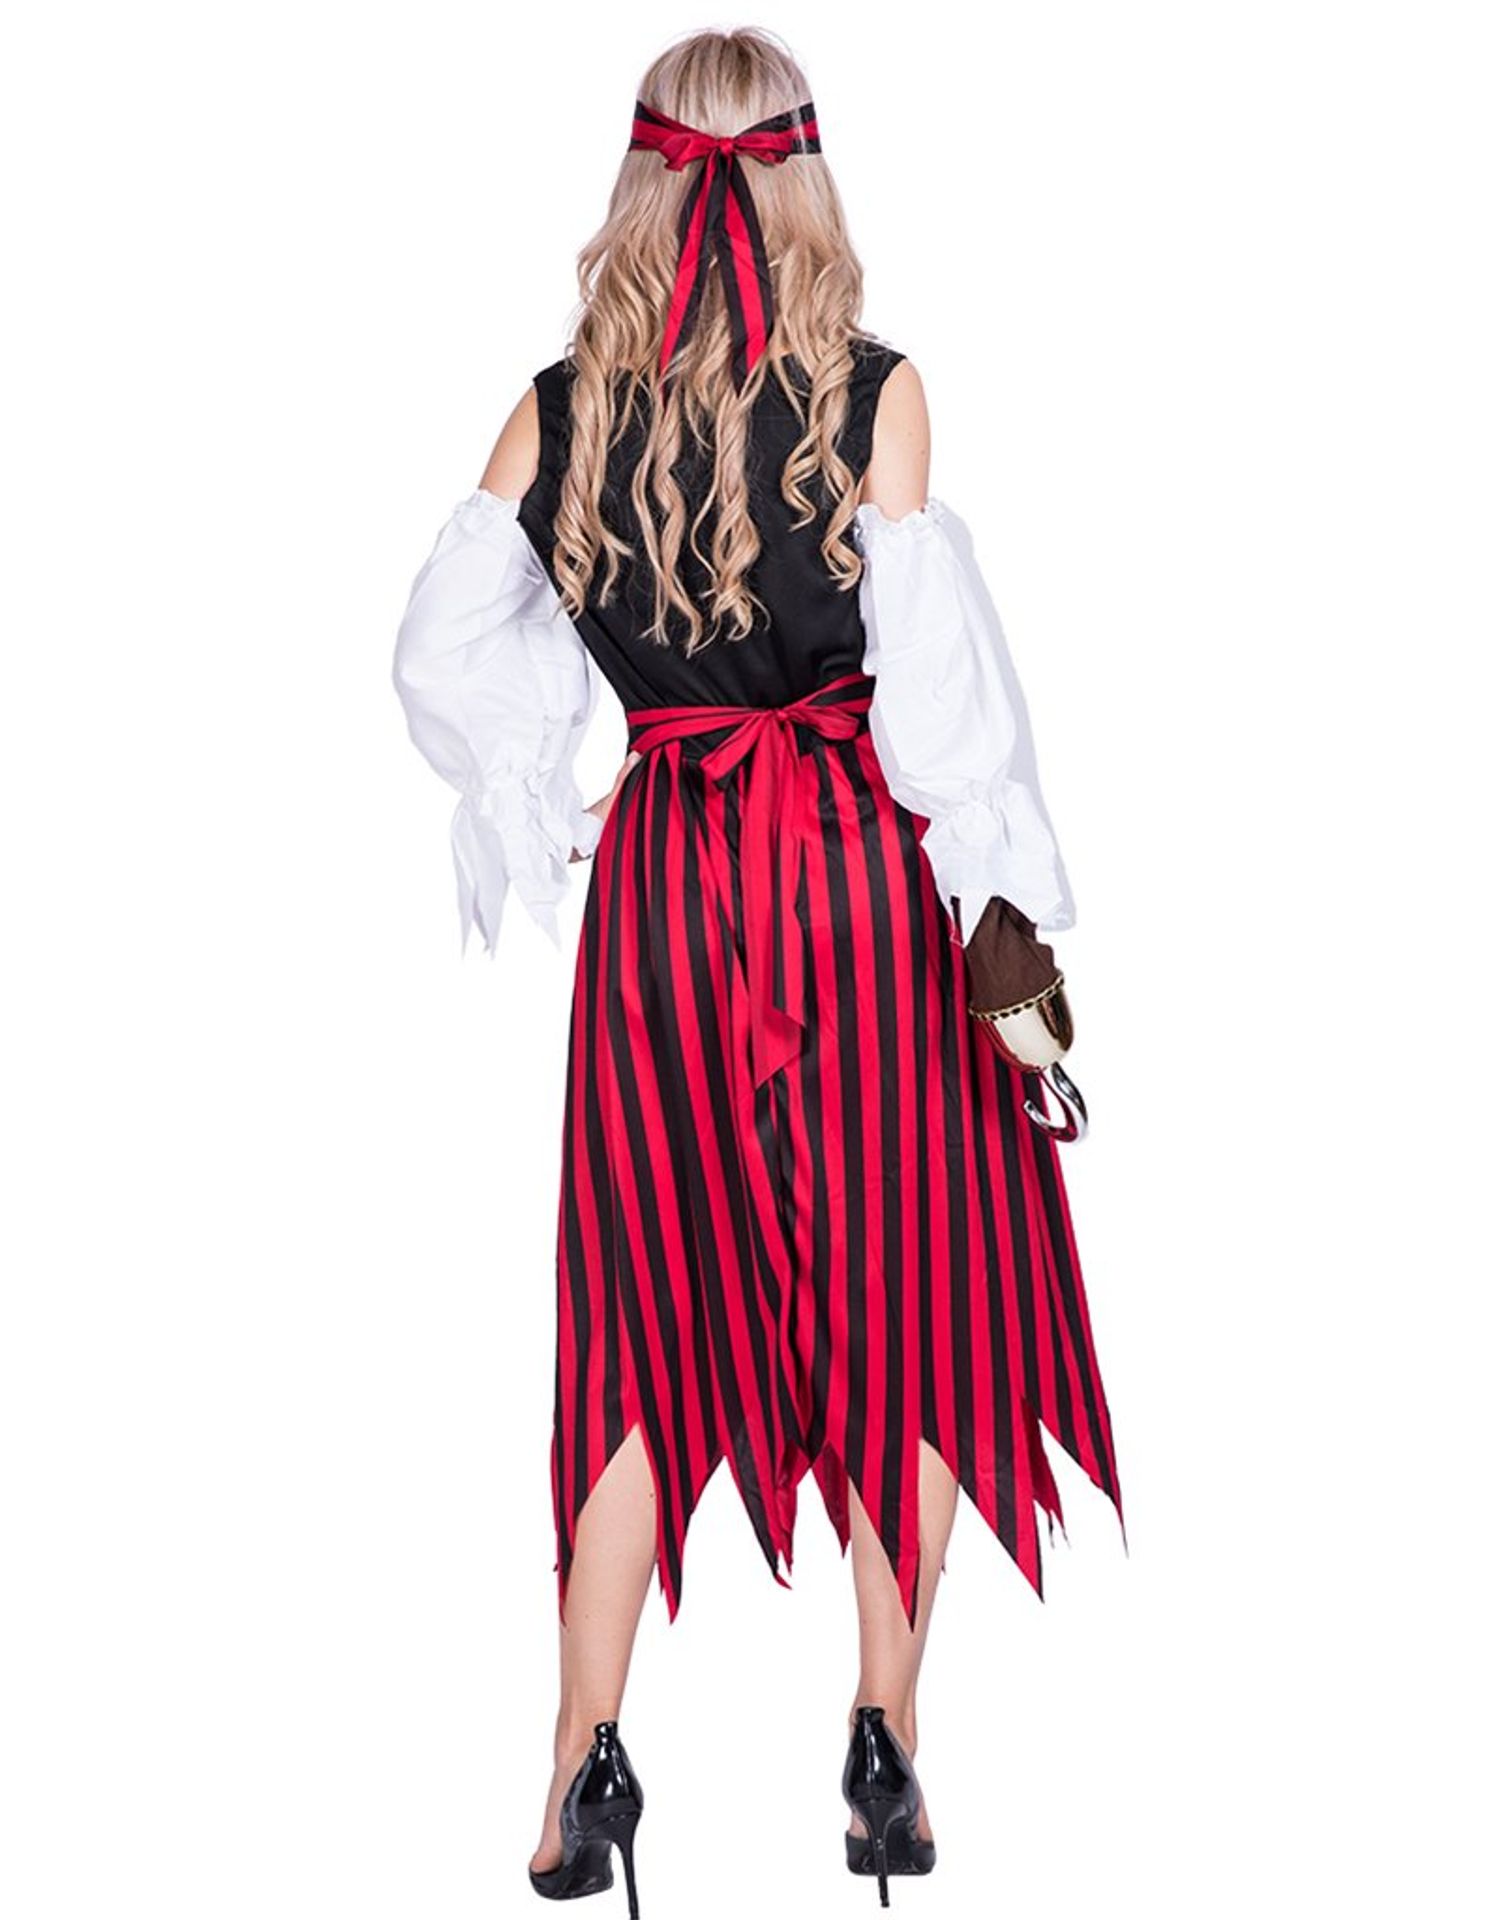 Eraspooky Womens Adult Pirate Costume 1749